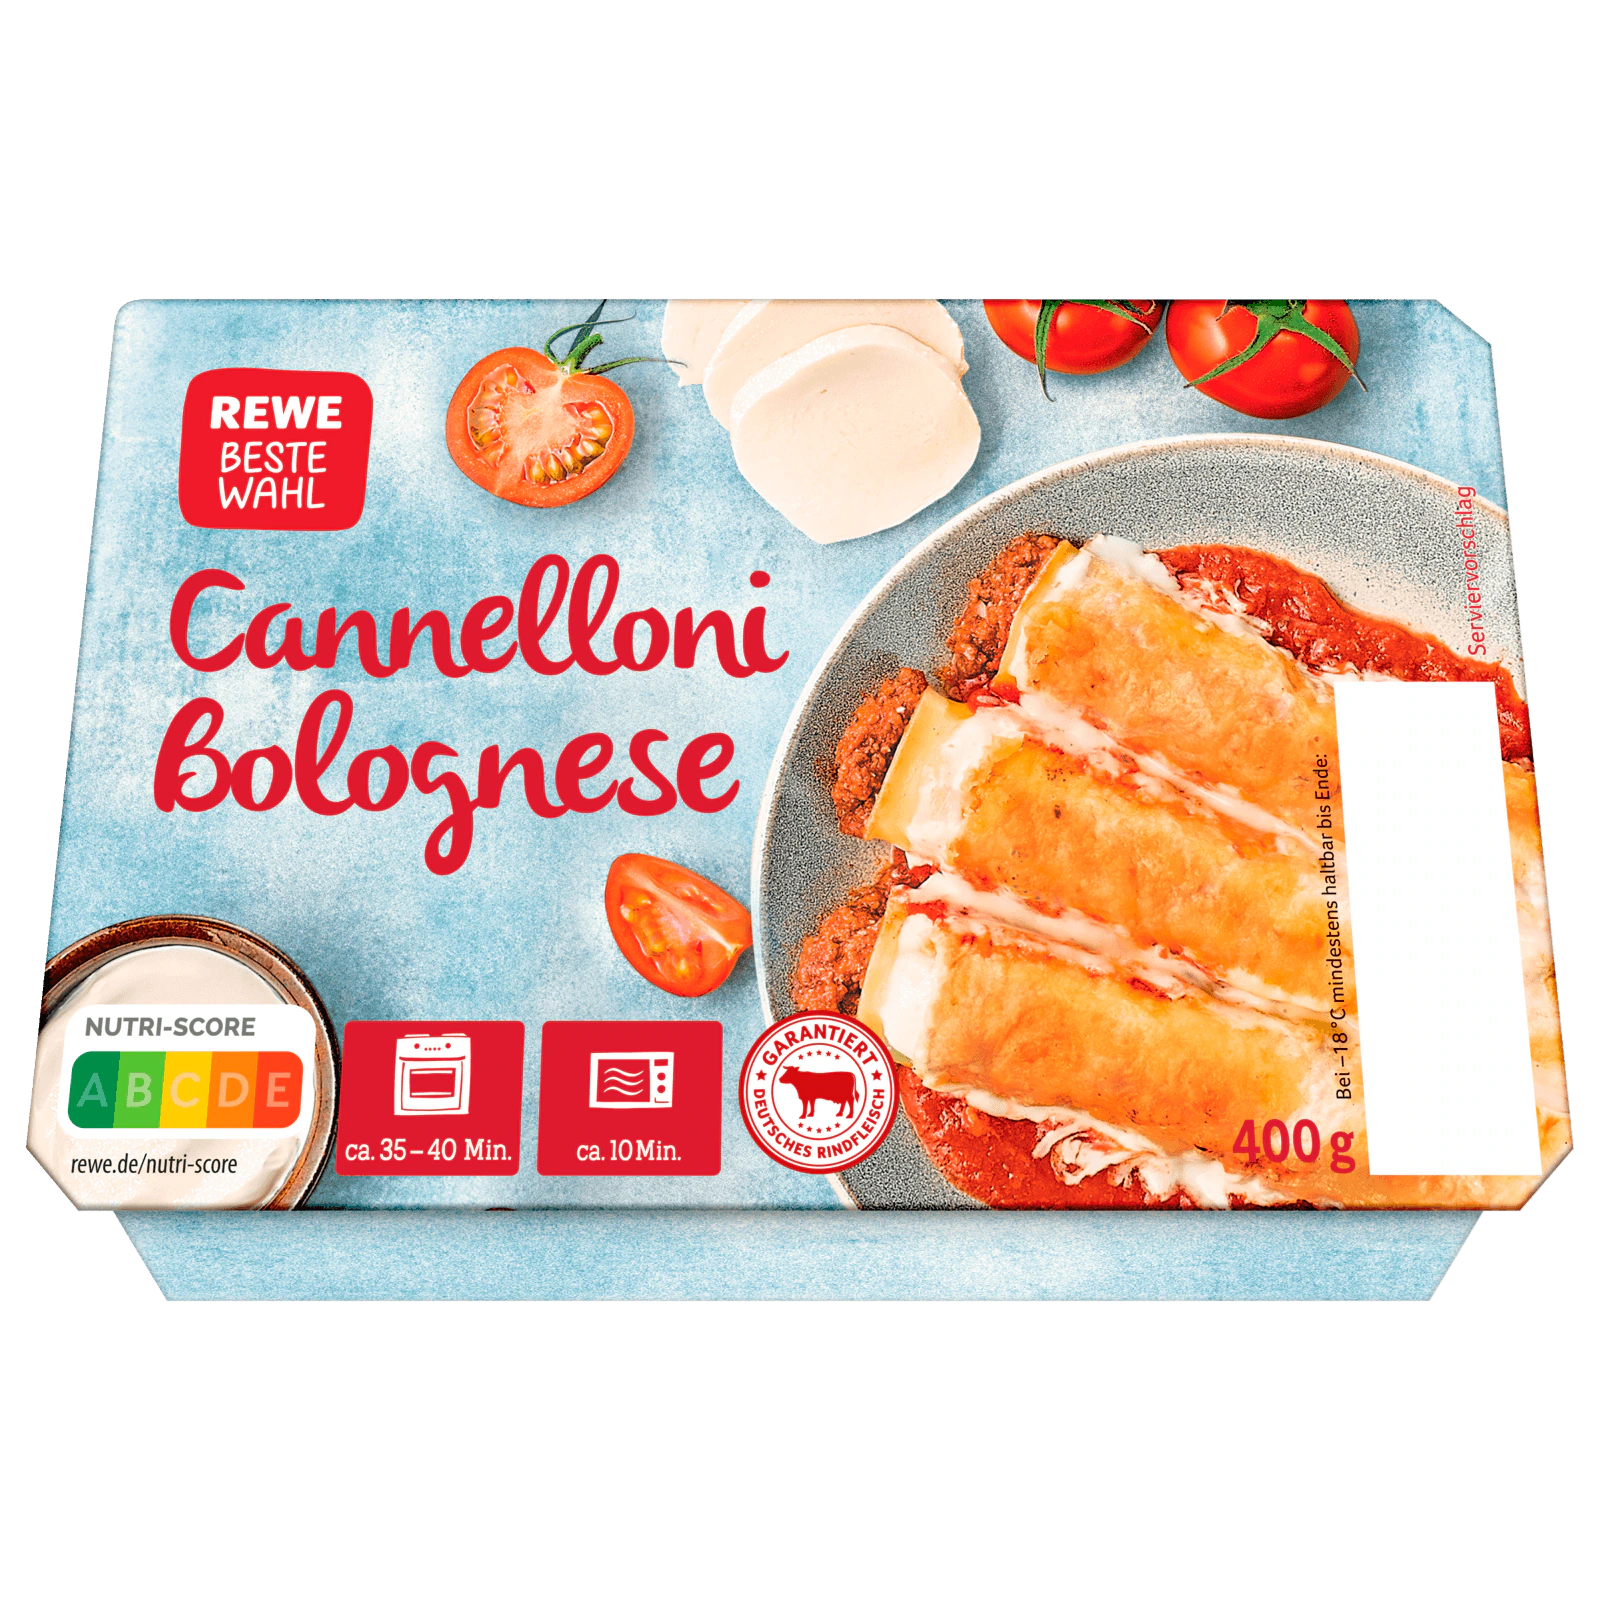 Rewe Beste Wahl Cannelloni Bolognese 400g Bei Rewe Online Bestellen